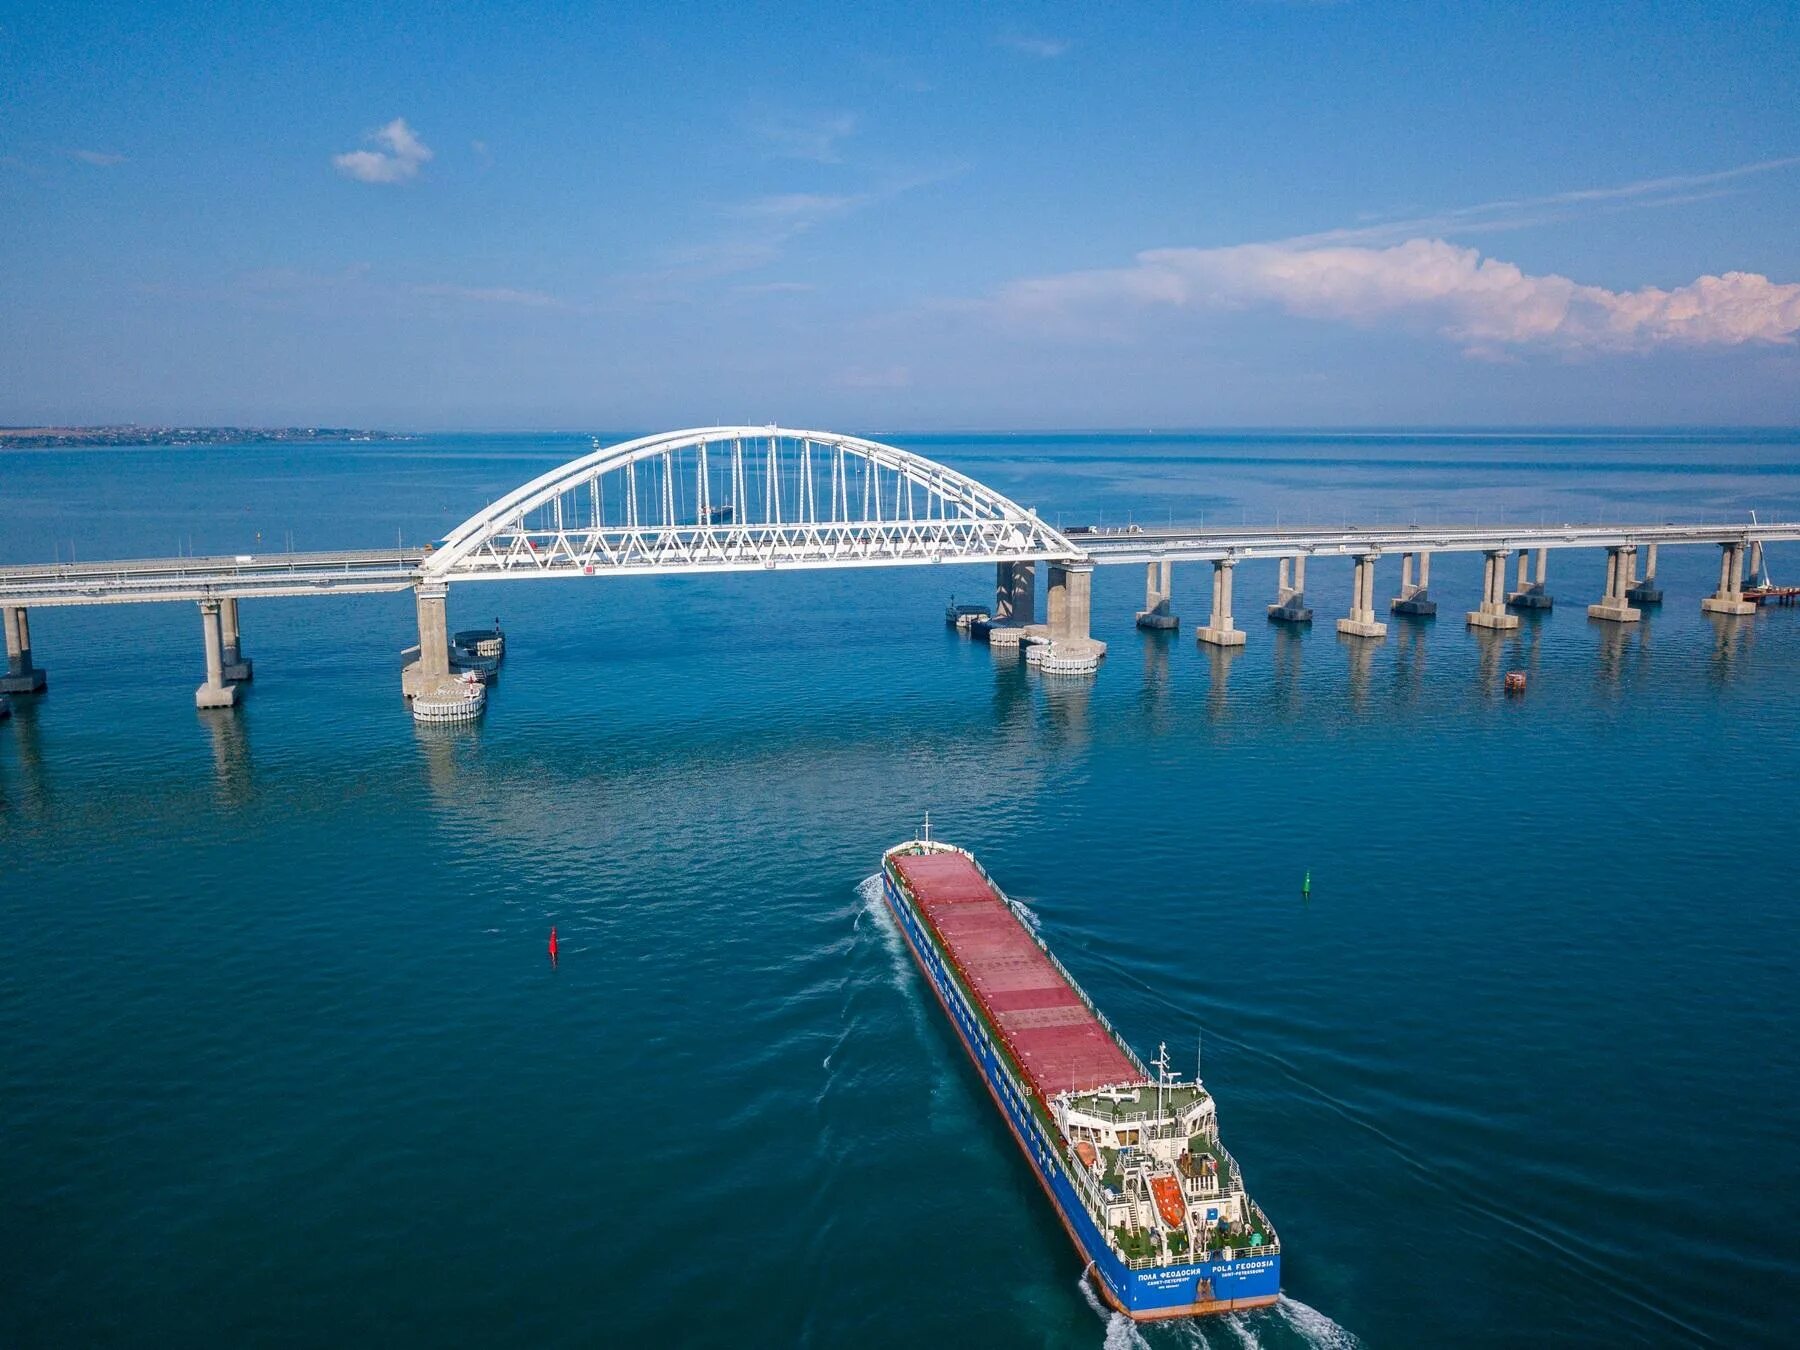 Крымский мост презентация